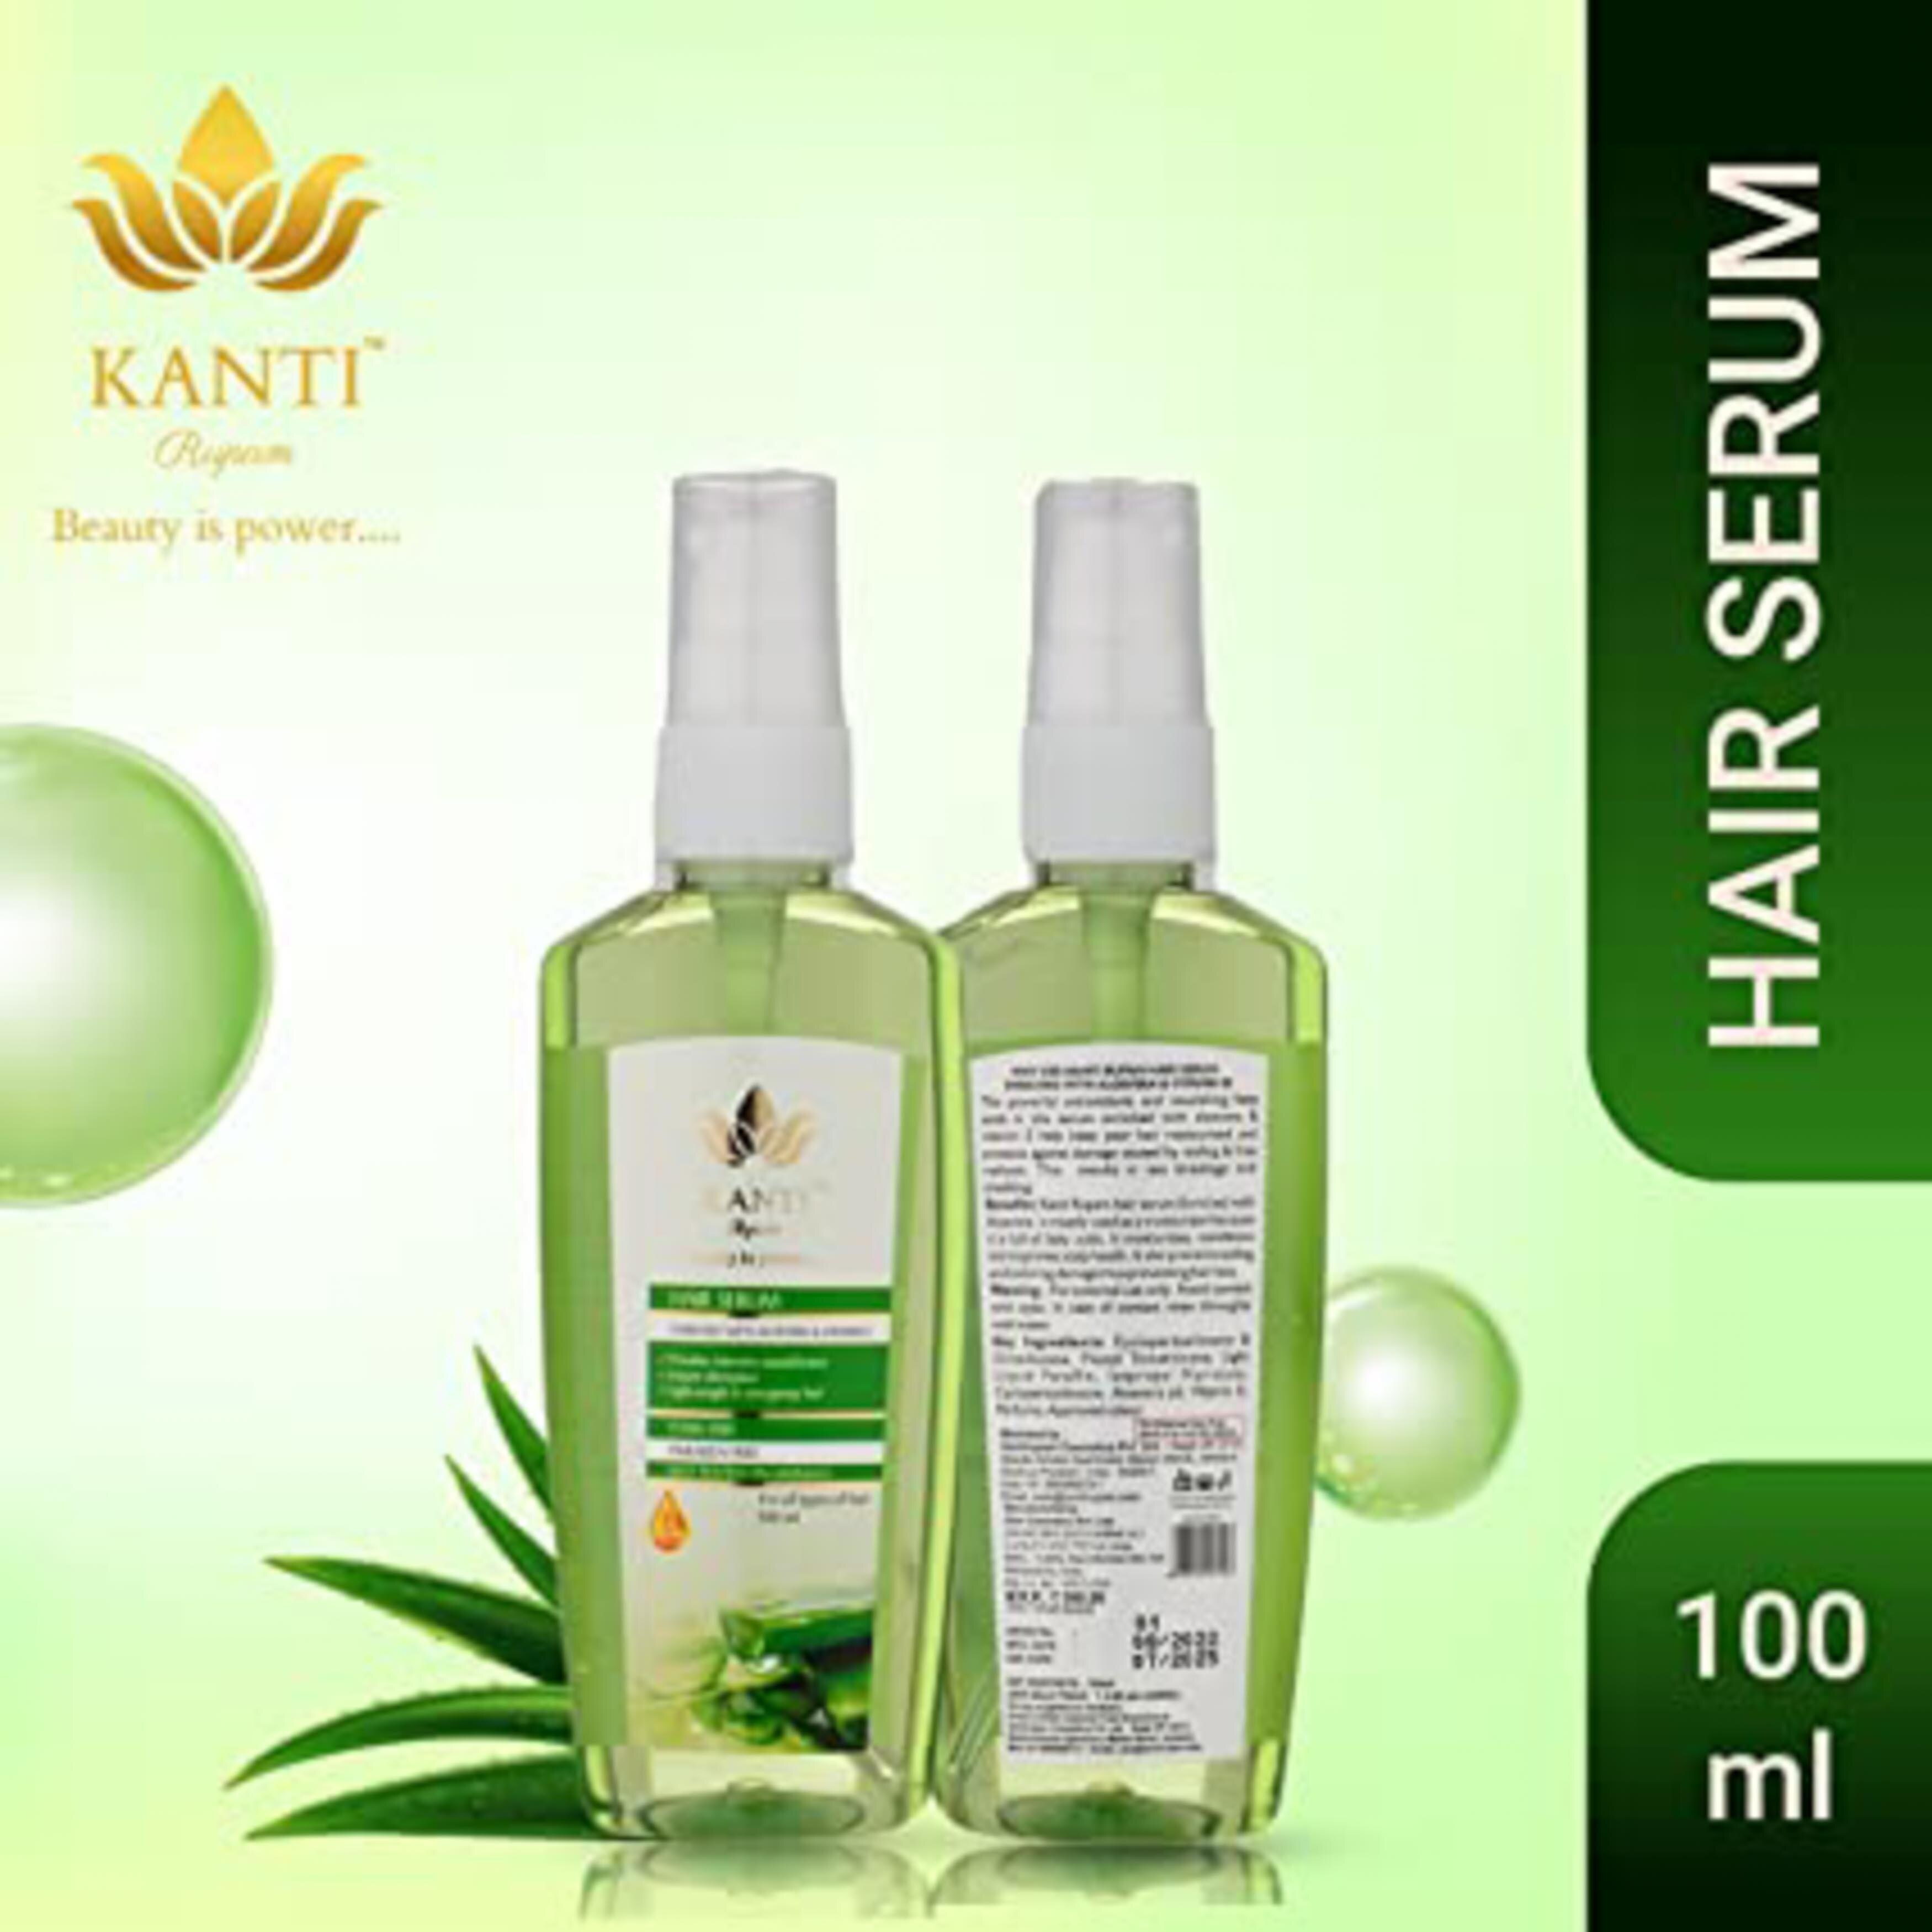 Kanti Rupam Cosmetics Hair Serum 100 ml - JioMart